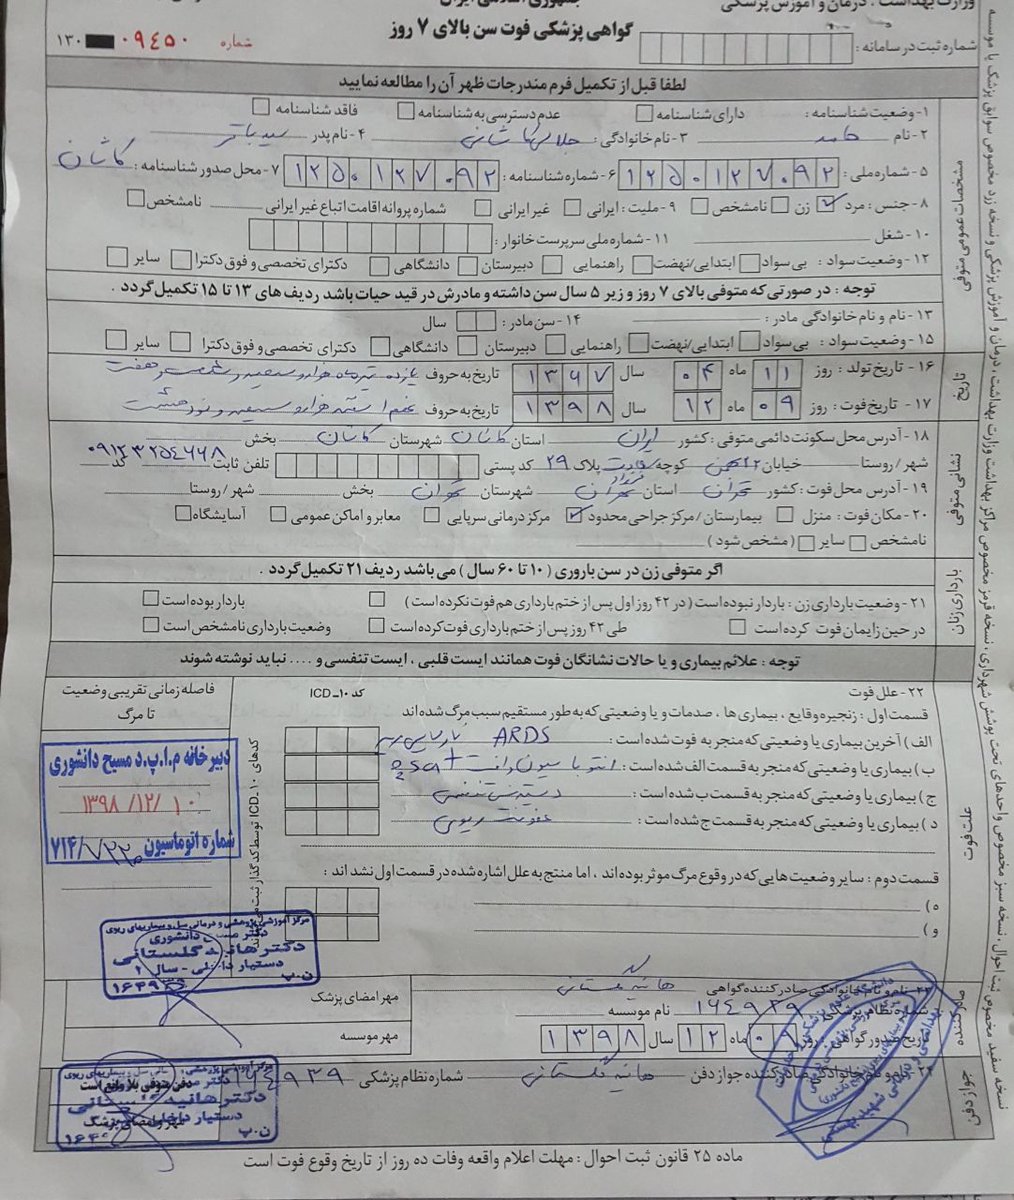 corona - iran death certificate